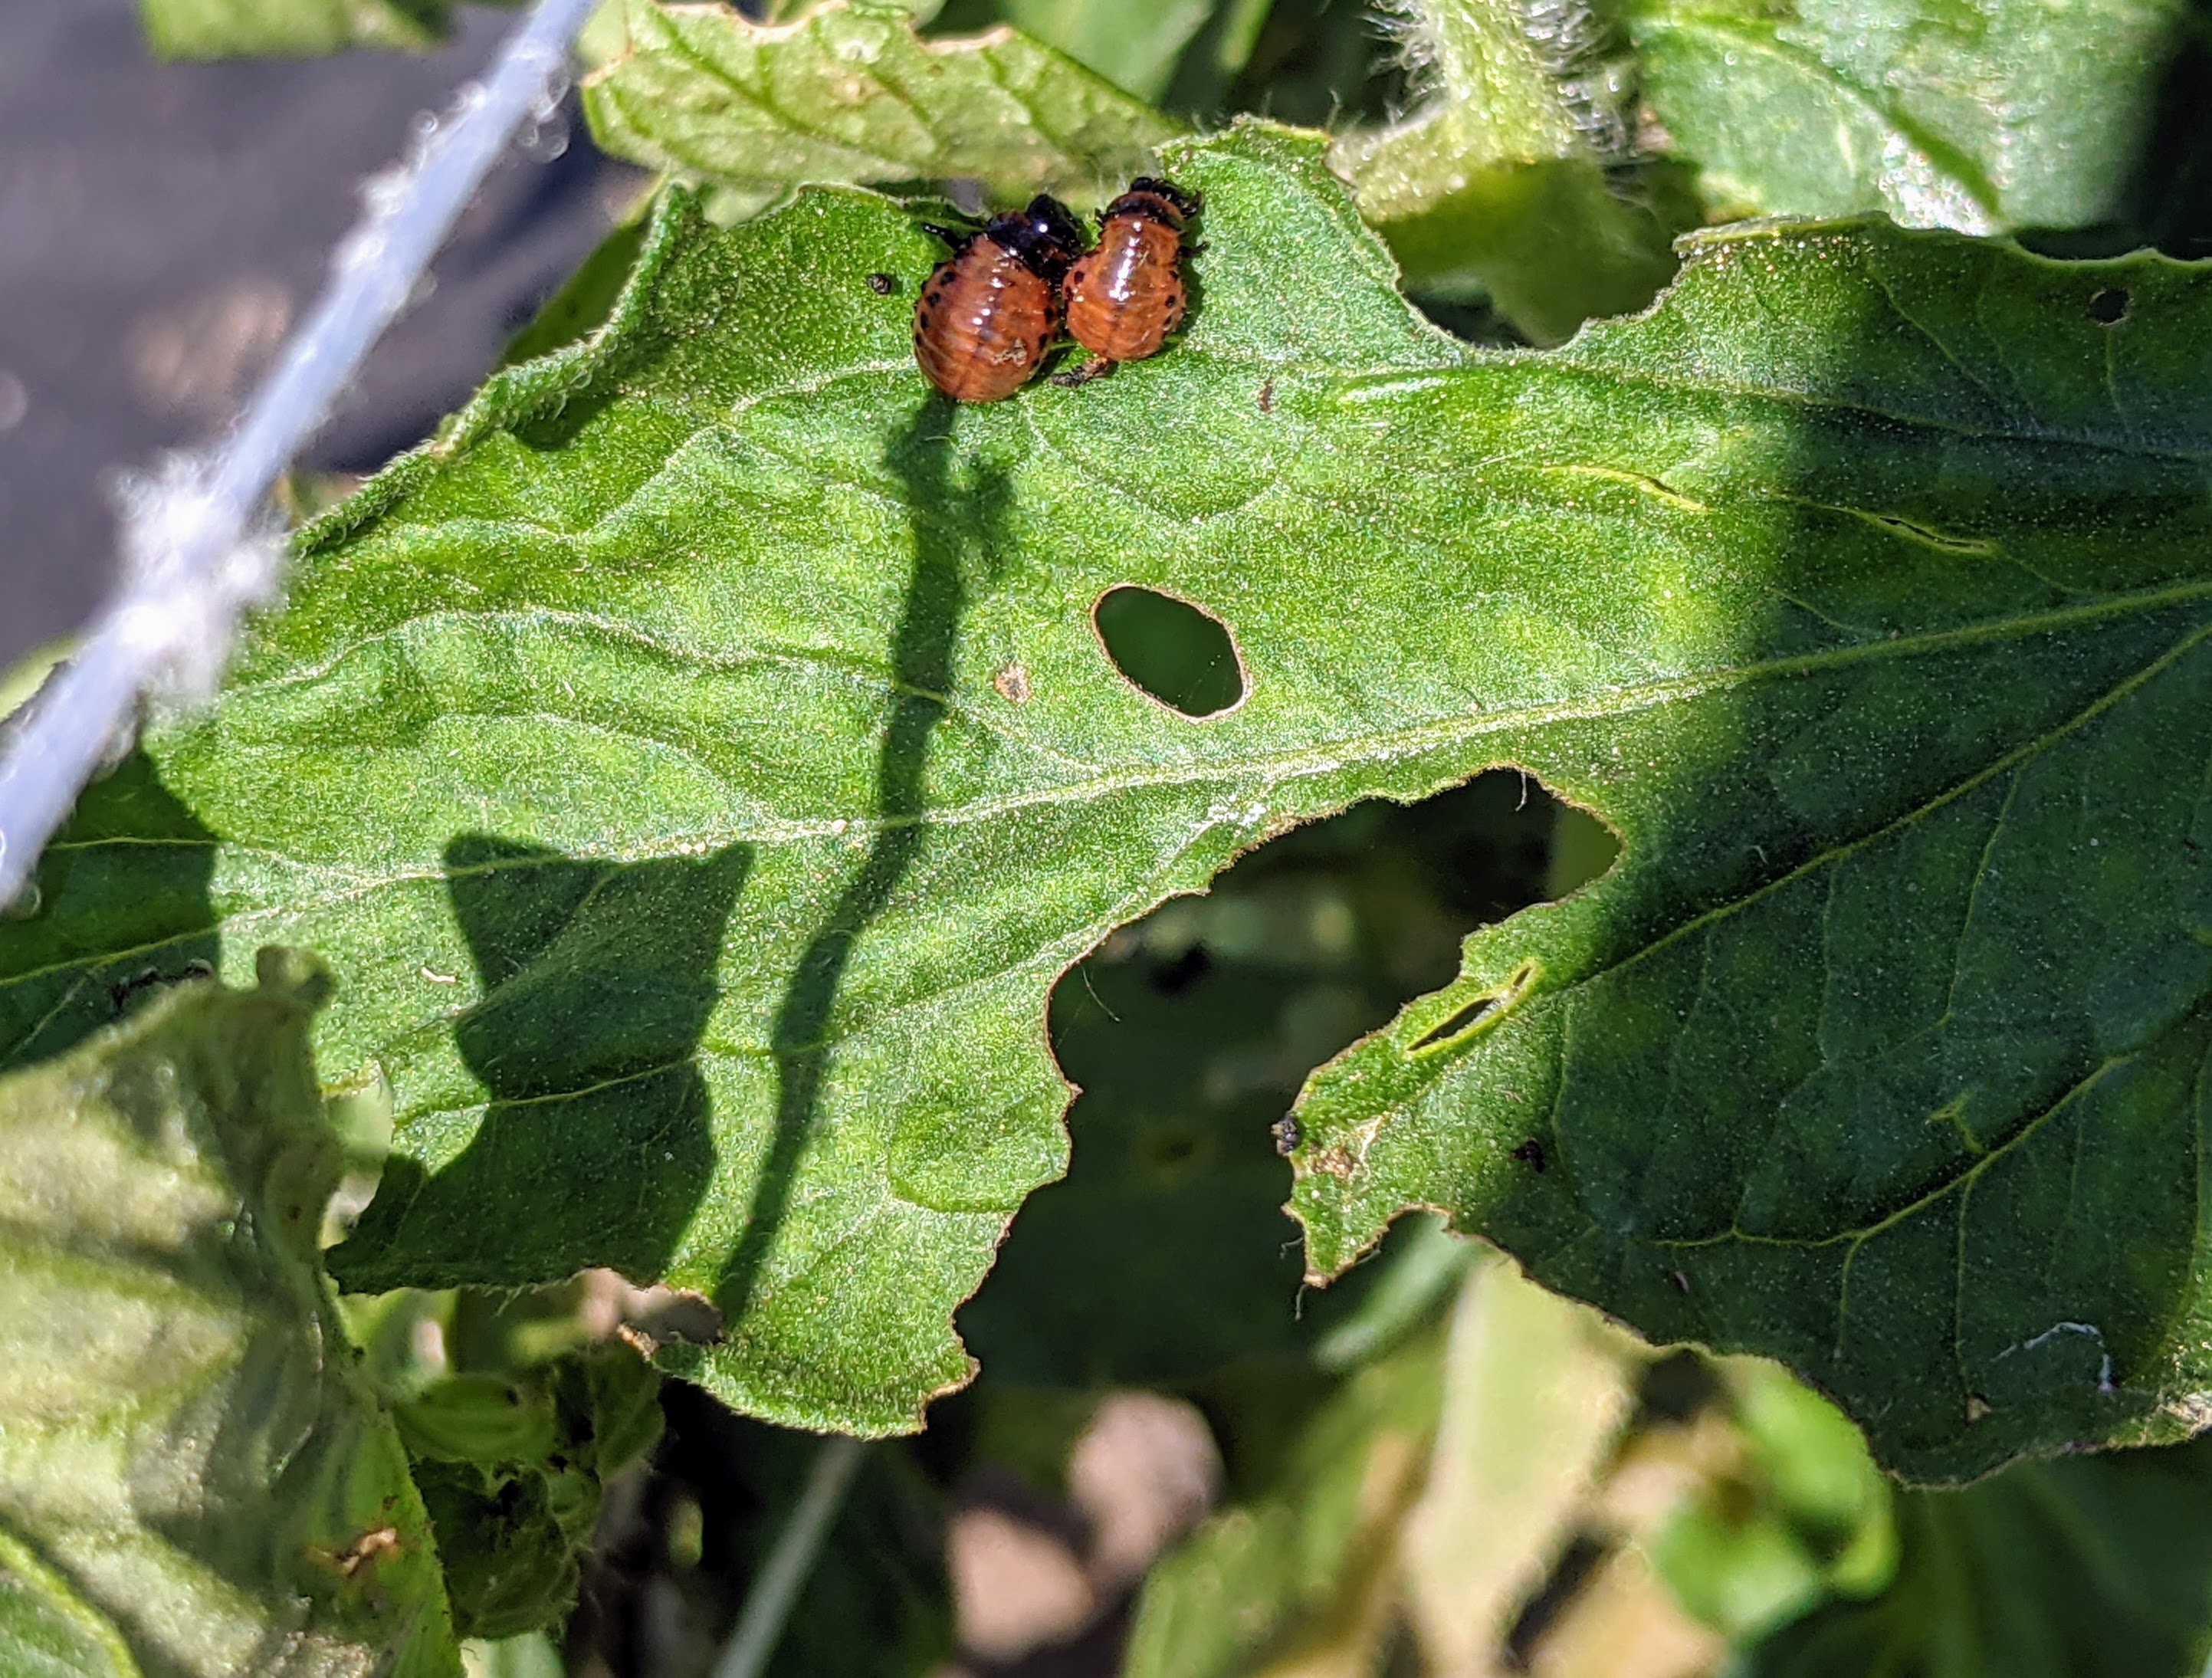 Colorado potato beetle feeding on leaf